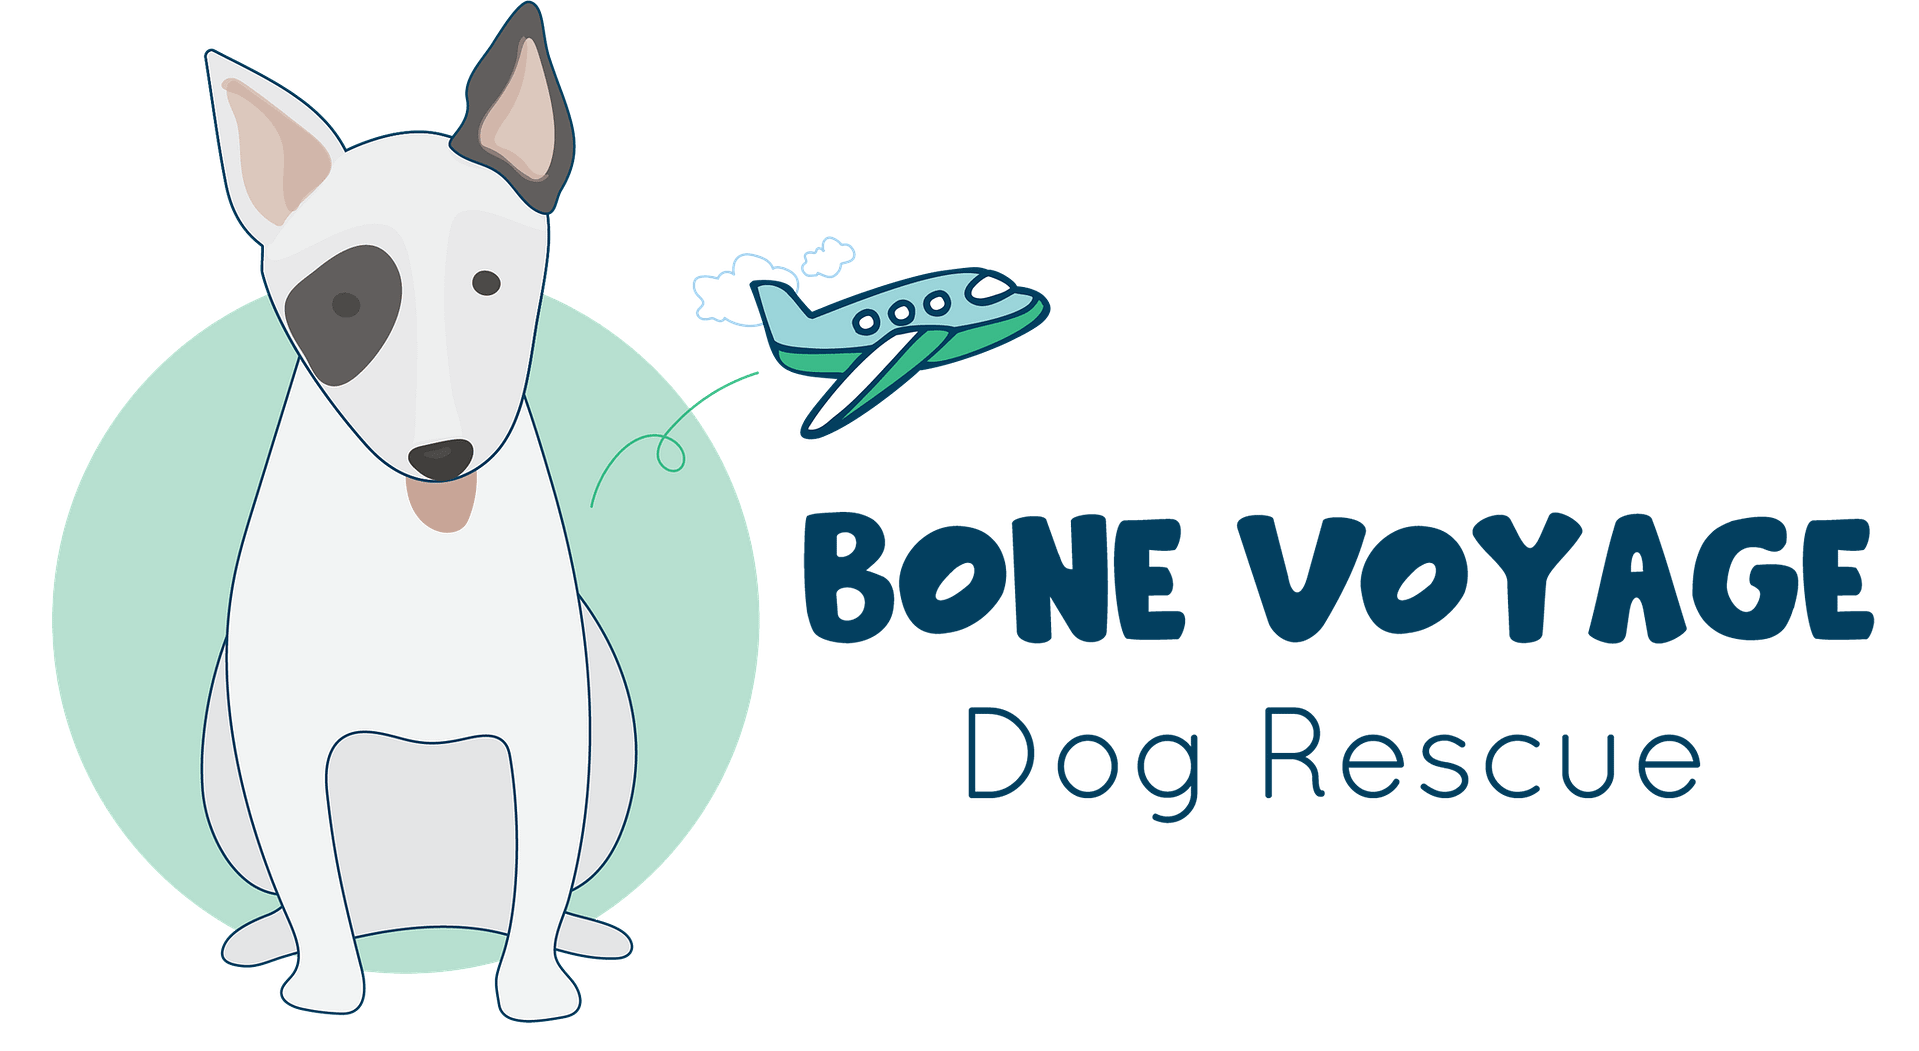 Guides by Bone Voyage Dog Rescue